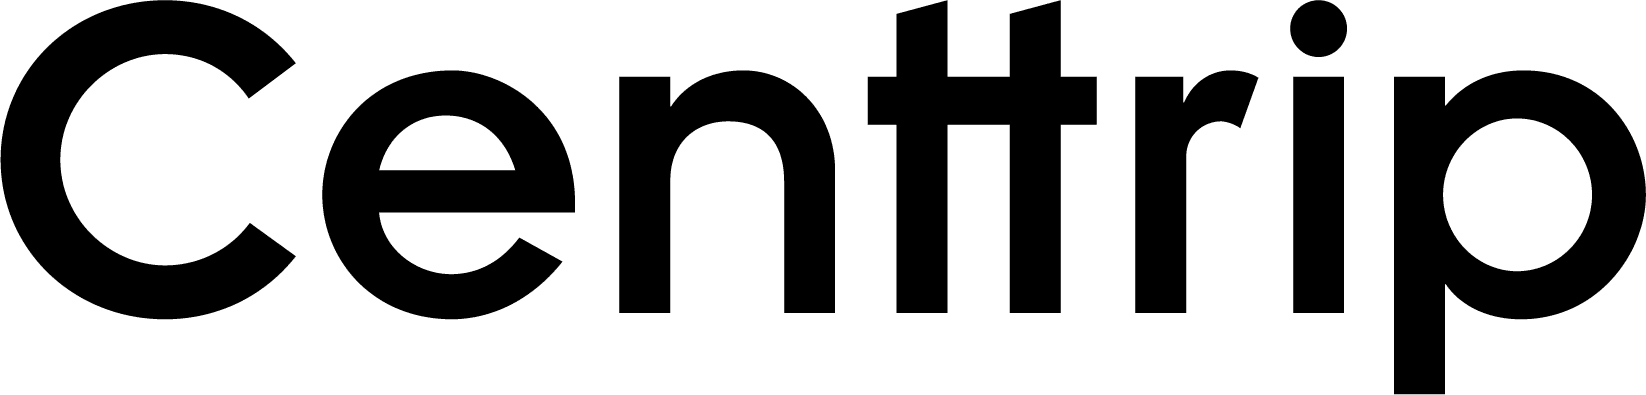 Centtrip logo